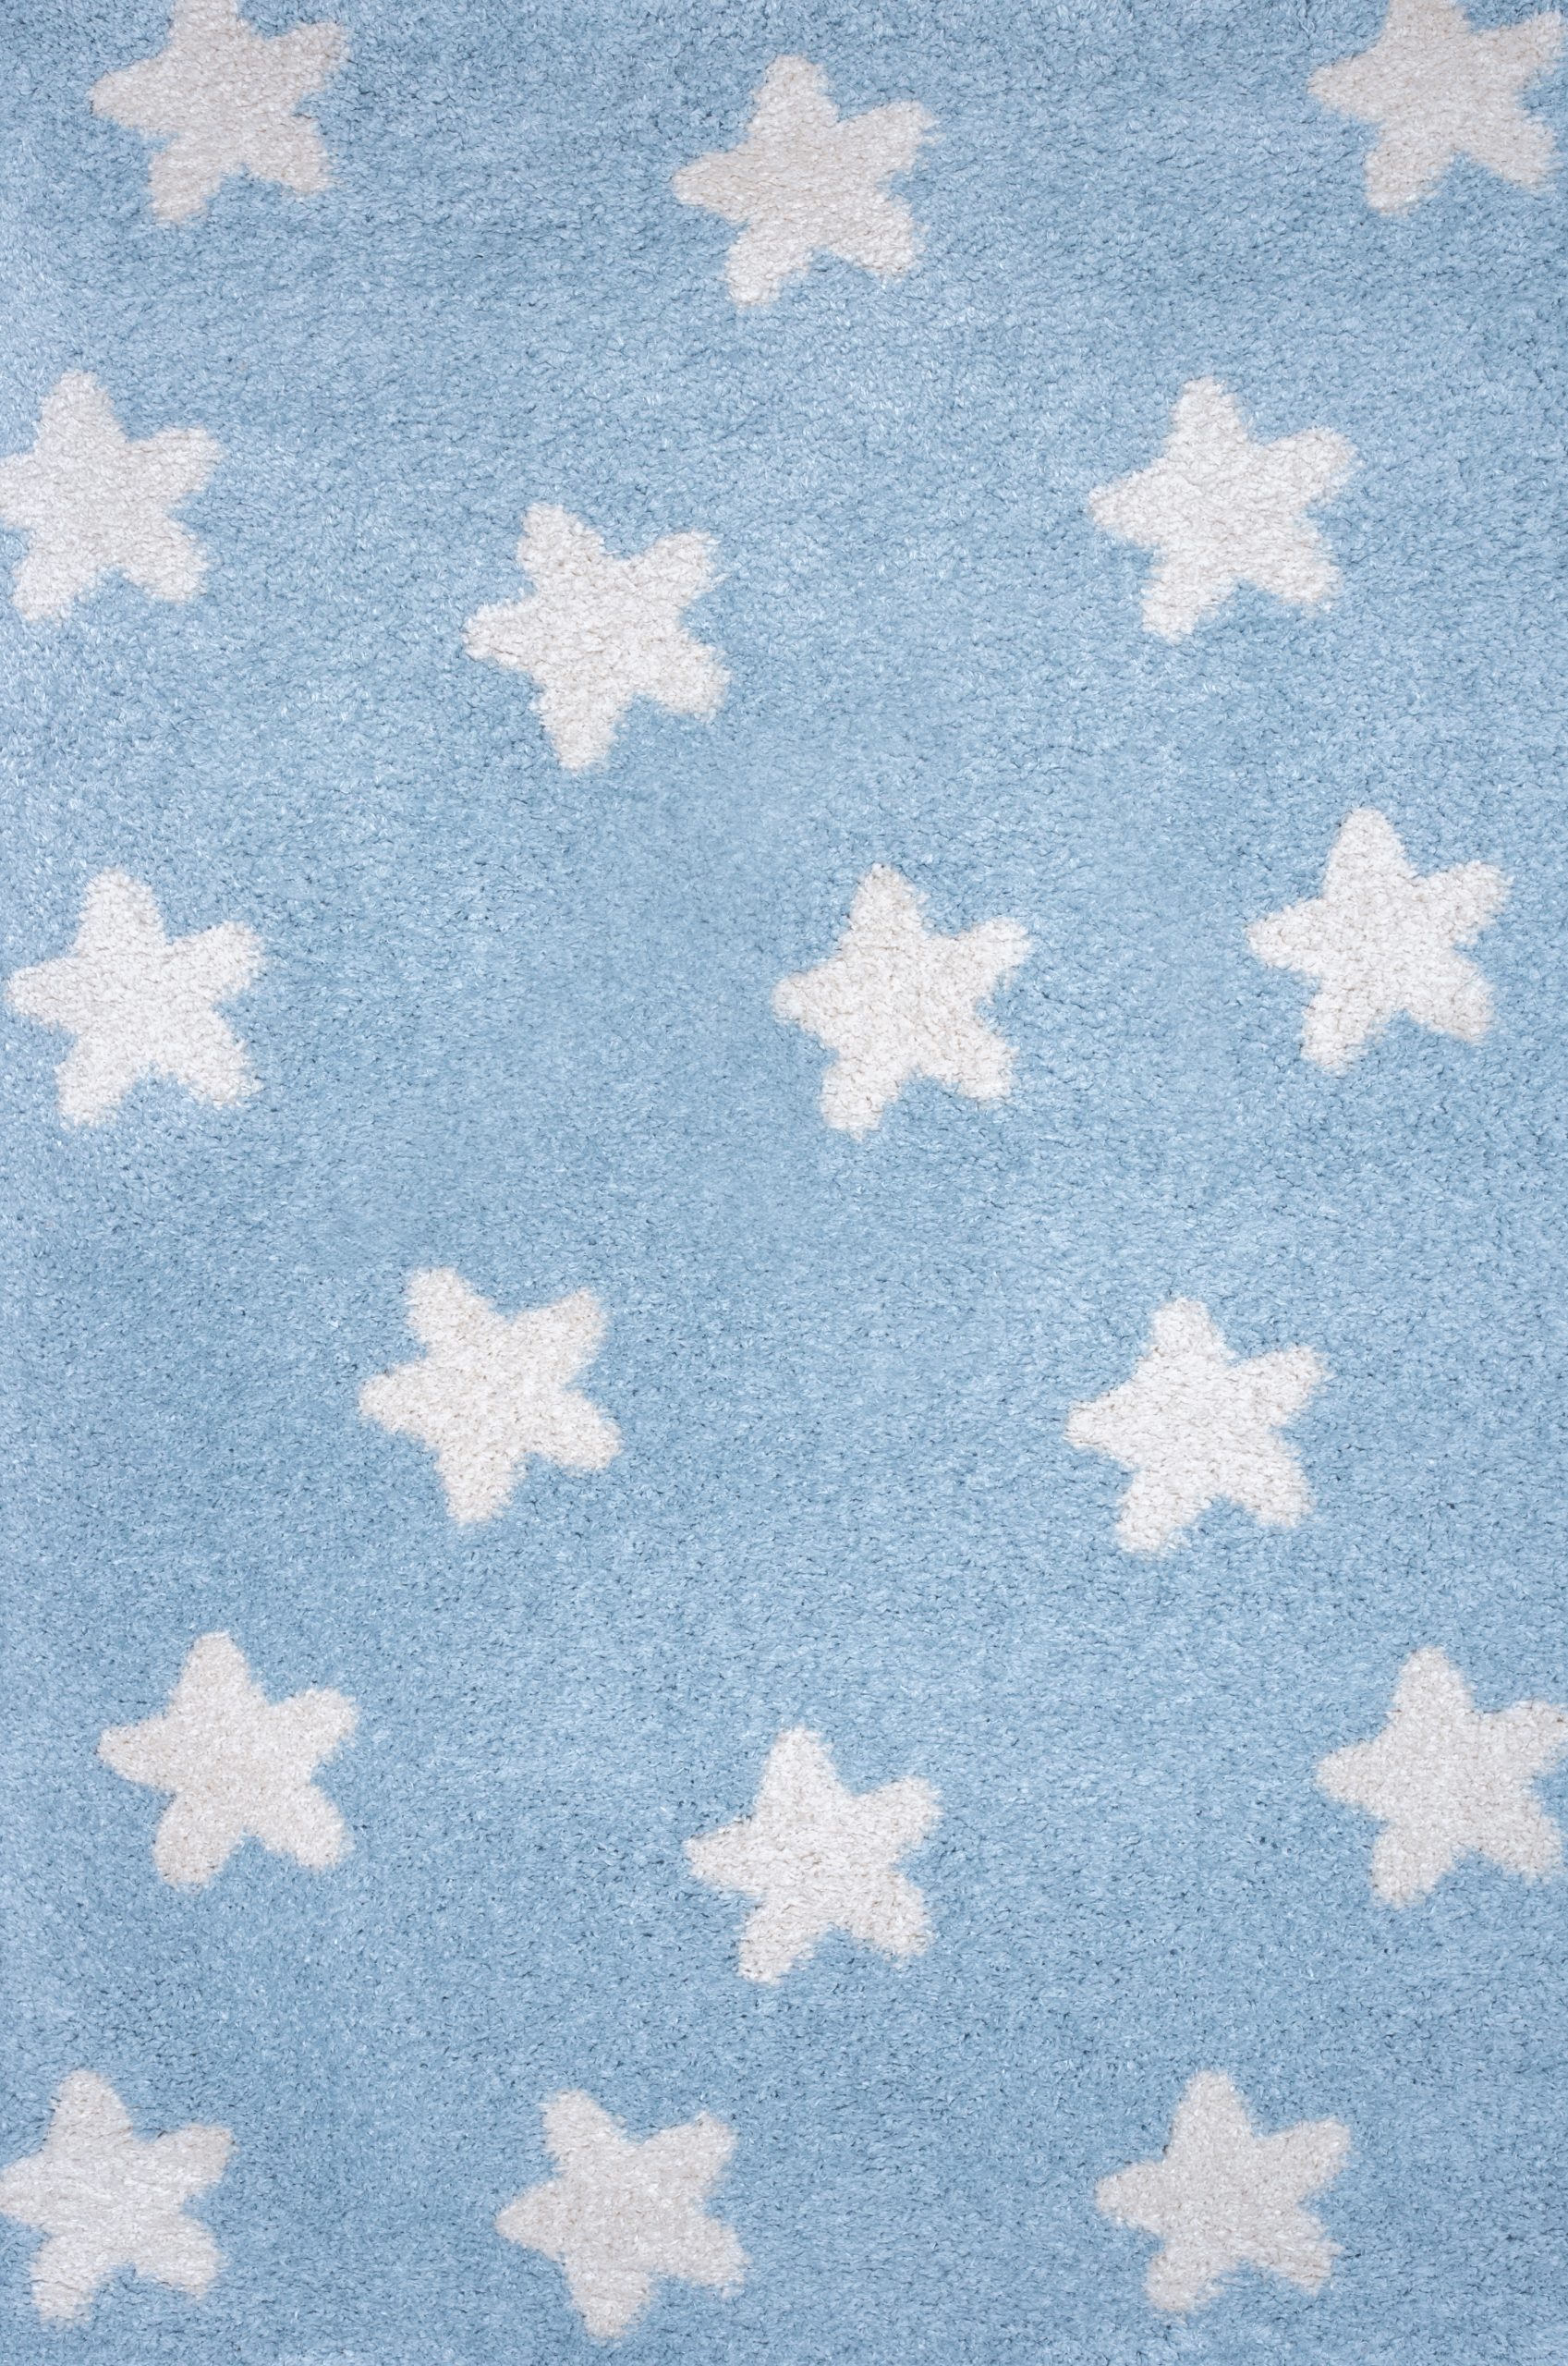 Shaggy παιδικό χαλί Cocoon 8391/30 γαλάζιο με αστεράκια - 1,30x1,90 Colore Colori